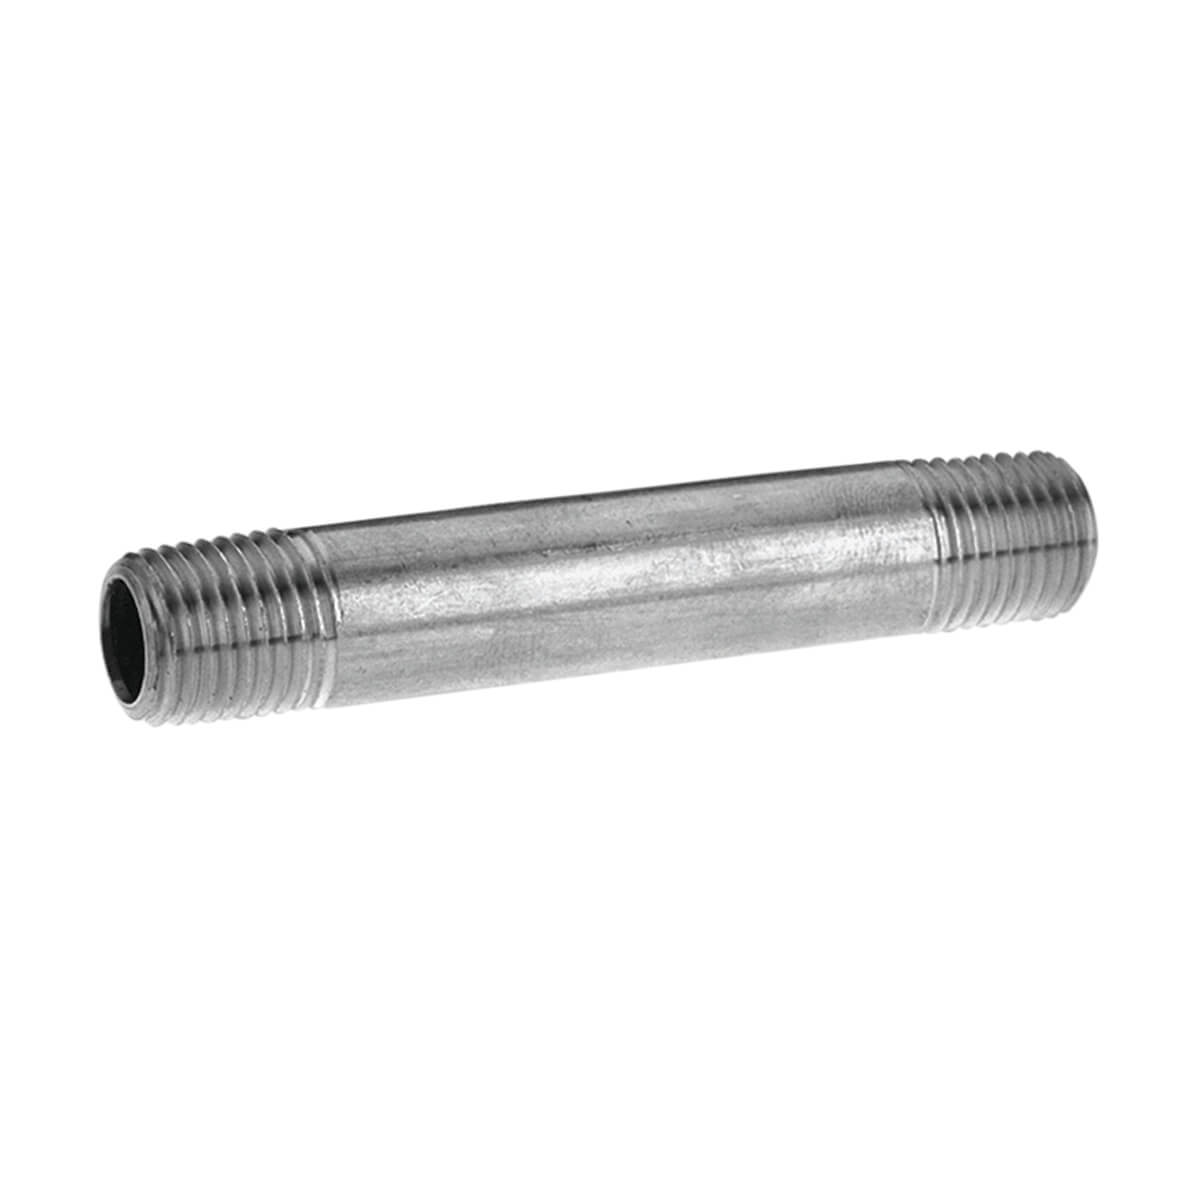 Pipe Nipple Galvanized Steel - 3/4-in x 36-in